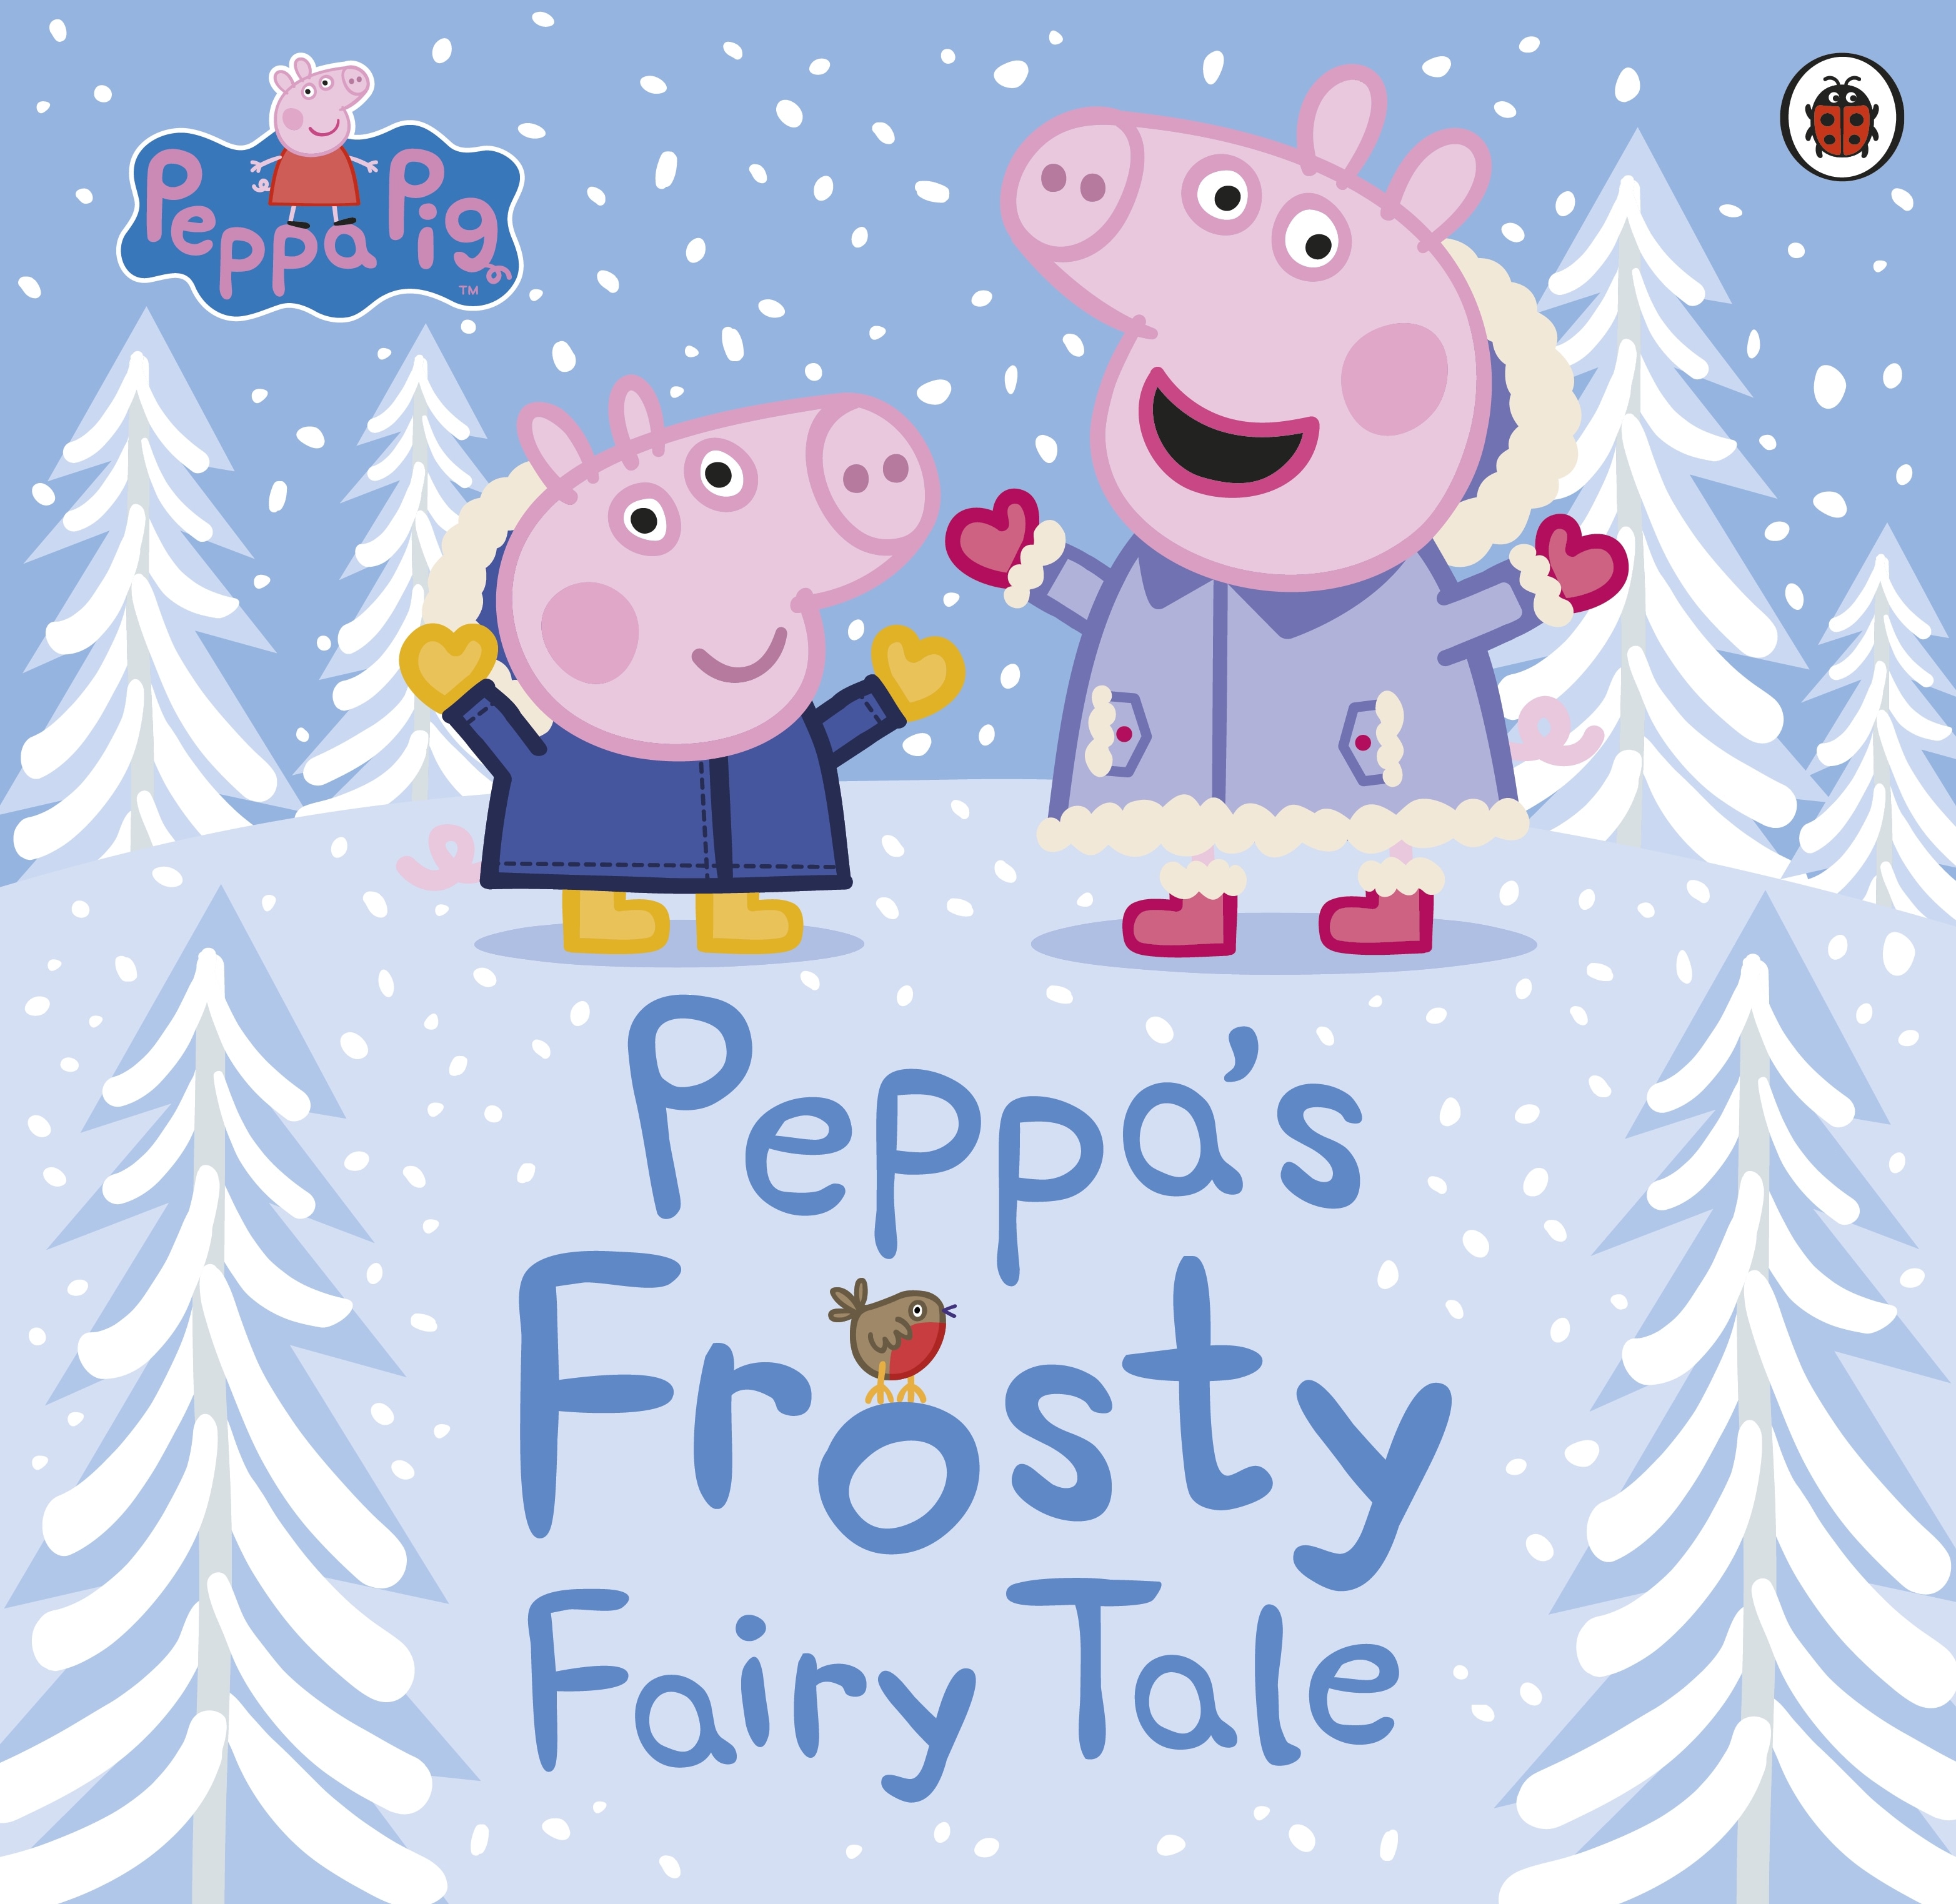 Book “Peppa Pig: Peppa's Frosty Fairy Tale” by Peppa Pig — November 14, 2019